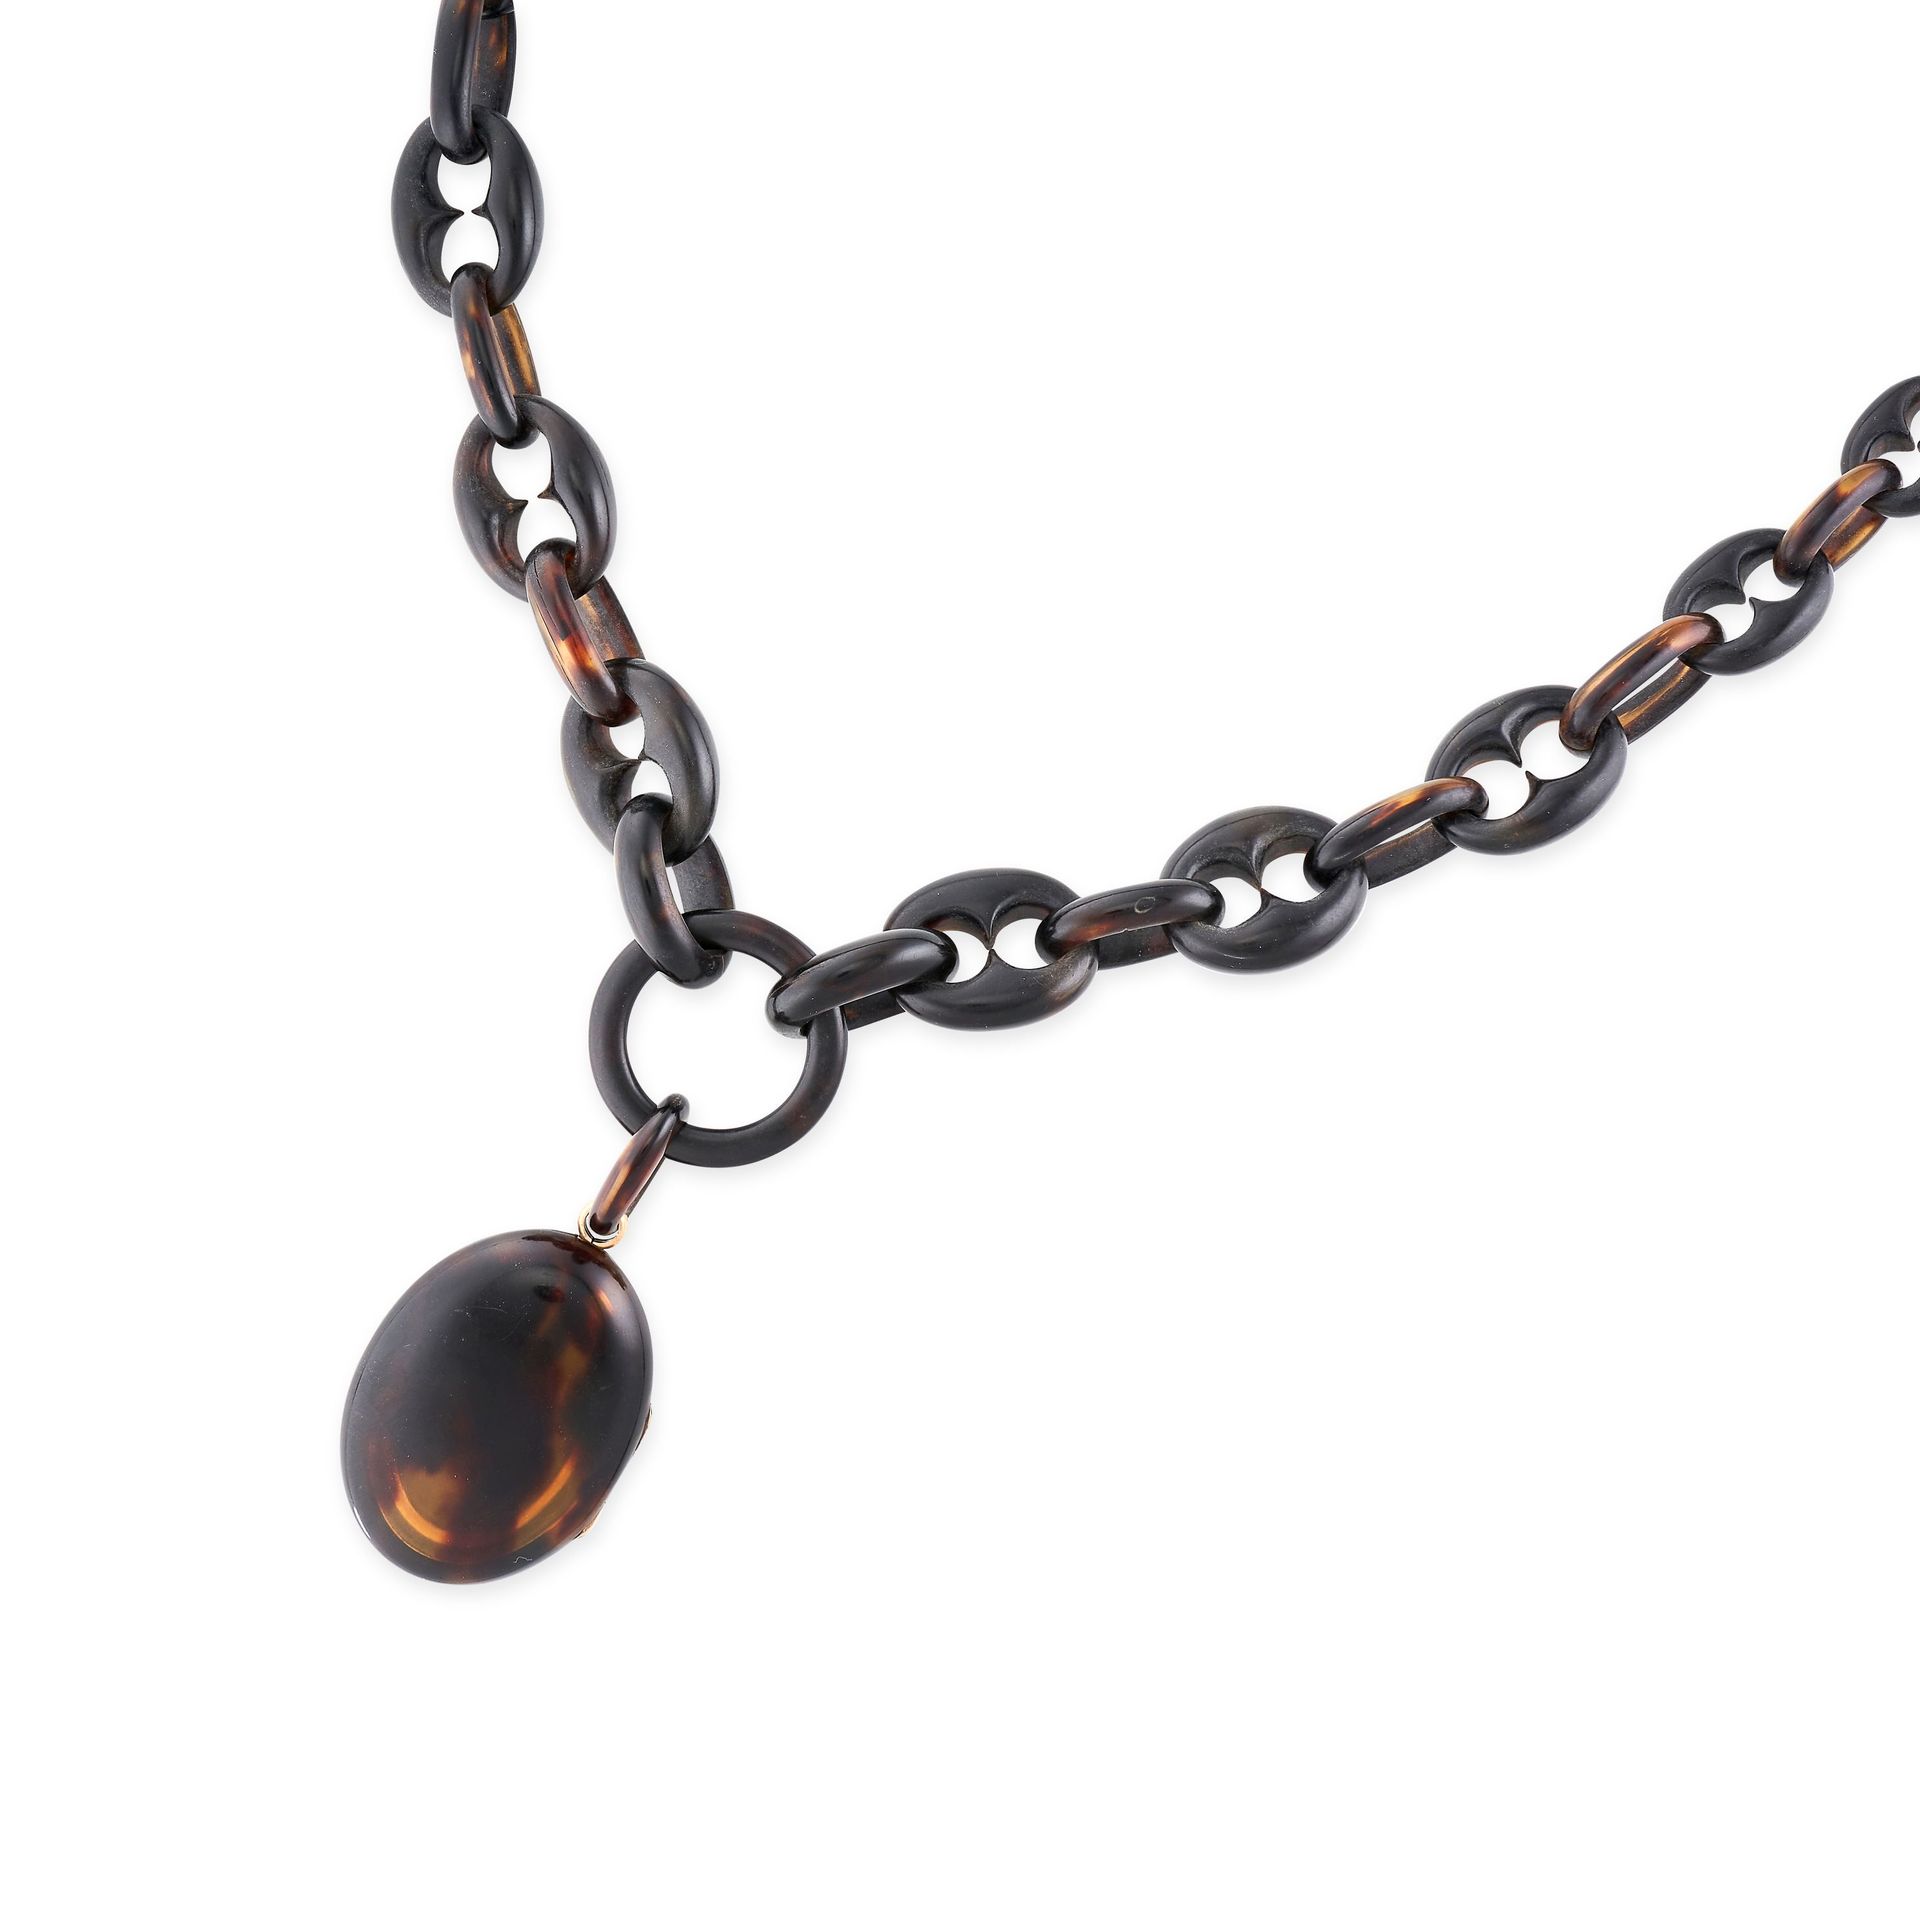 Null ANTIQUE TORTOISSHELL LOCKET NECKLACE, 19世纪，由一系列玳瑁色的水手链组成，悬挂着一个铰链式吊坠，无化验标记，项&hellip;